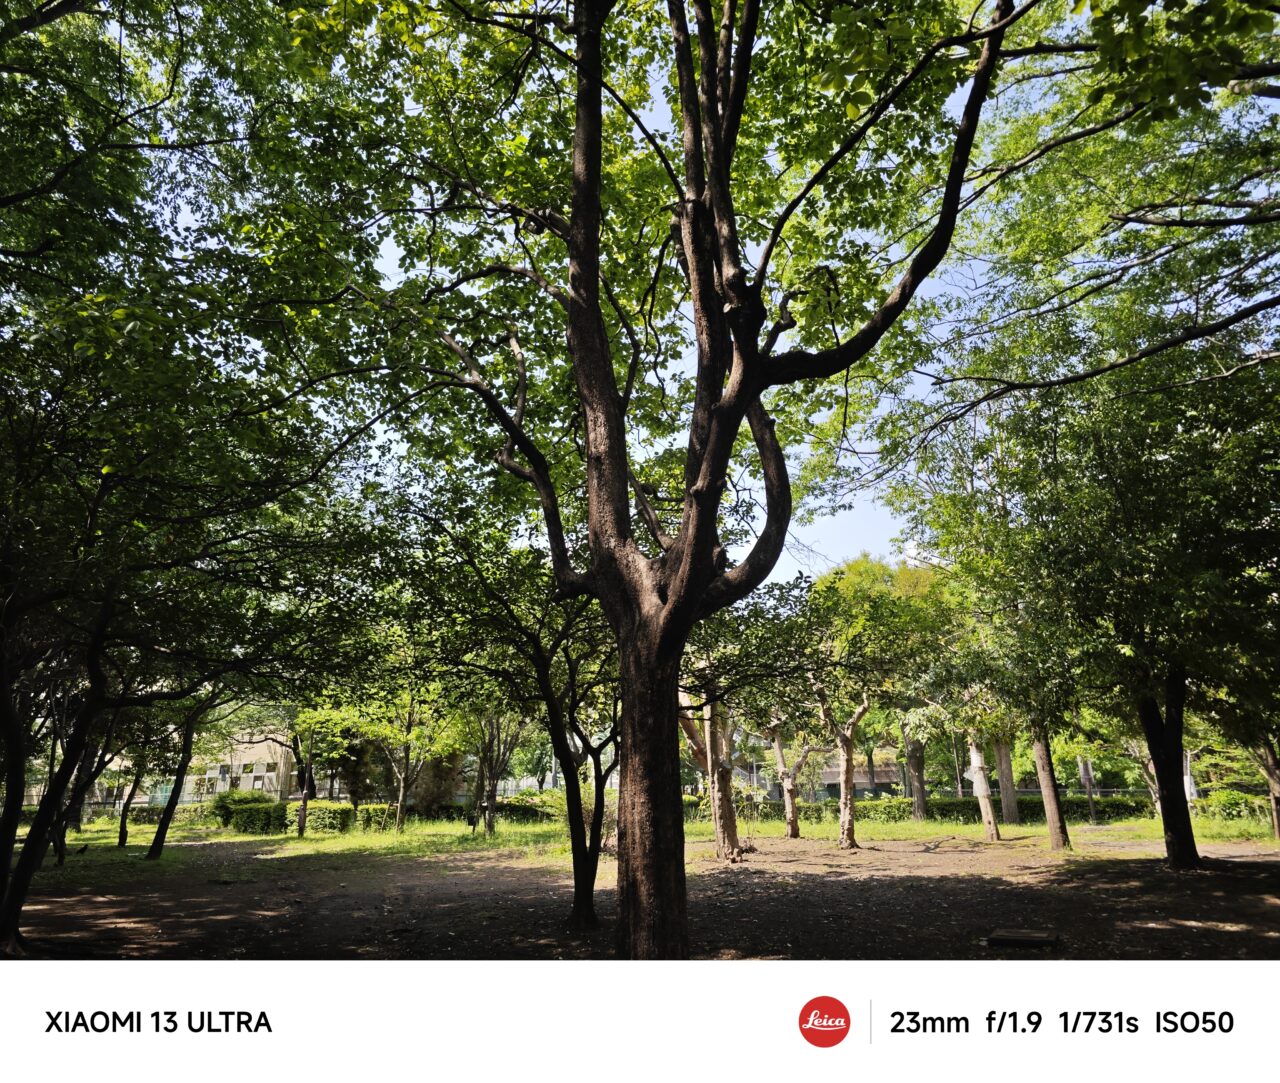 Xiaomi 13 Ultraで撮影した写真。「Leica Authentic Look」（ライカオーセンティックルック）モード。その3。